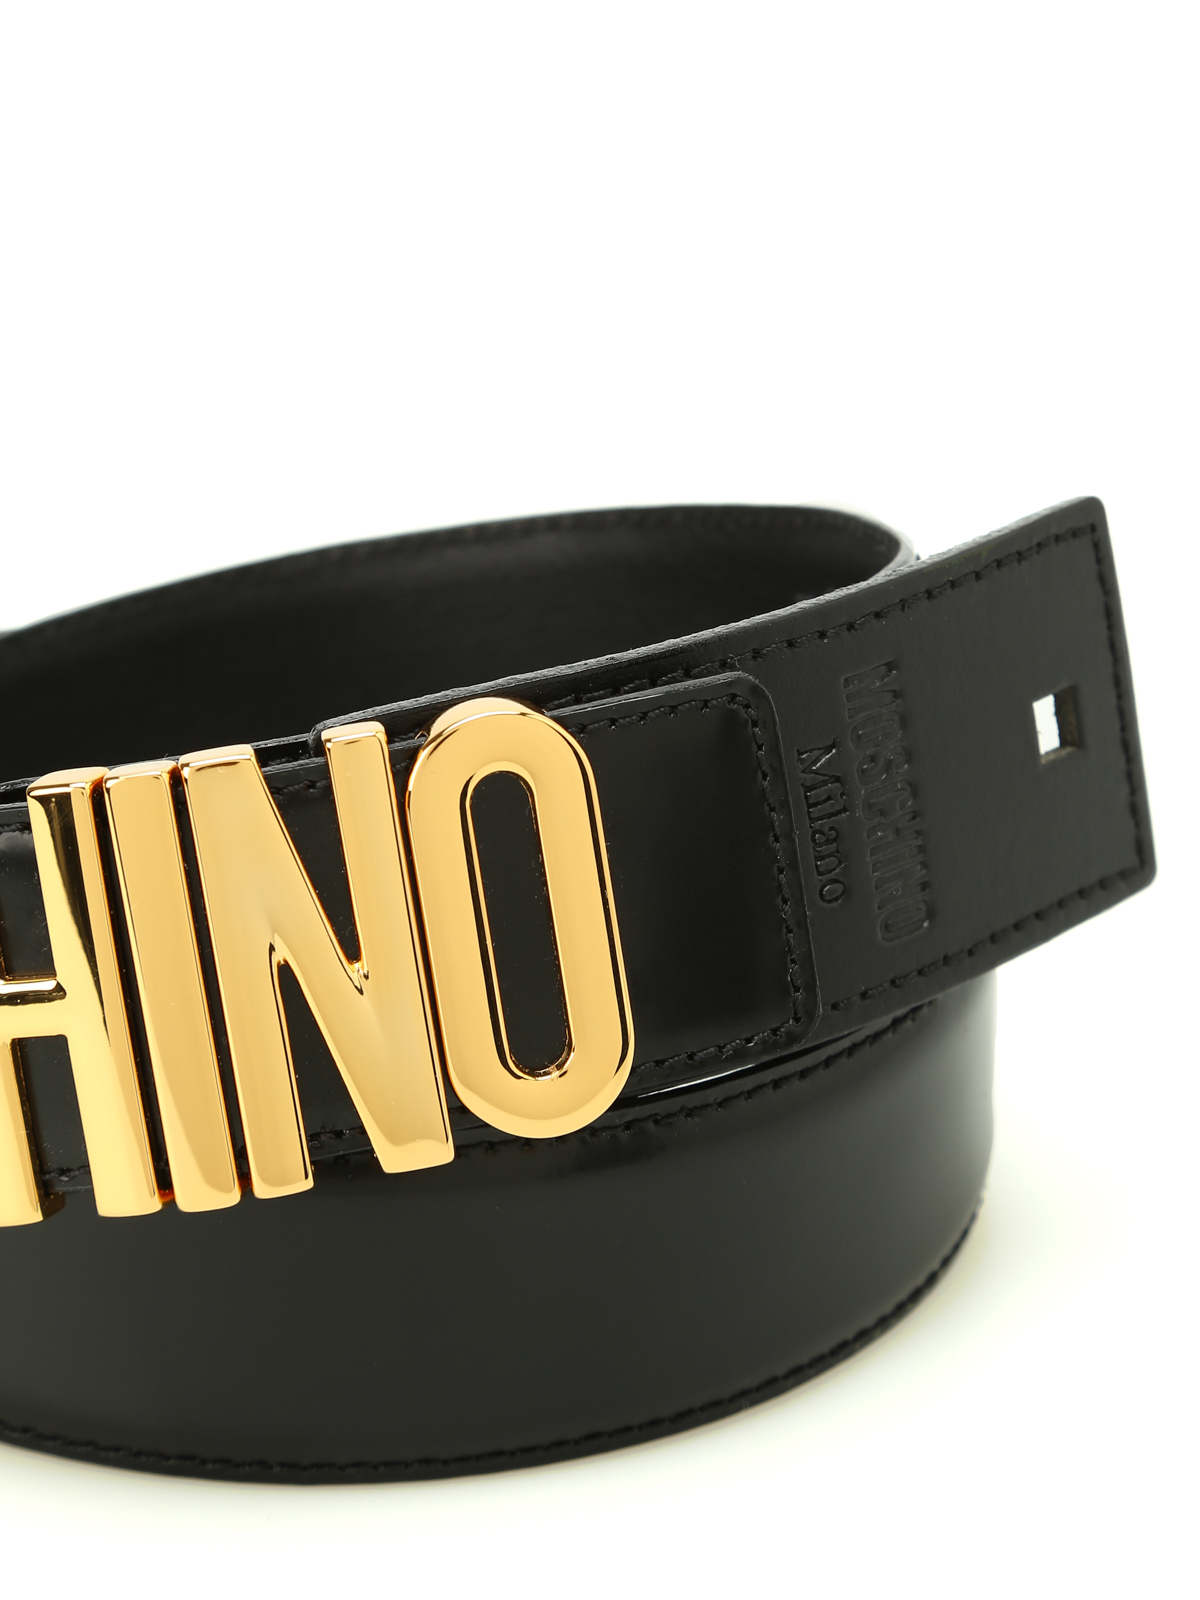 moschino logo leather belt